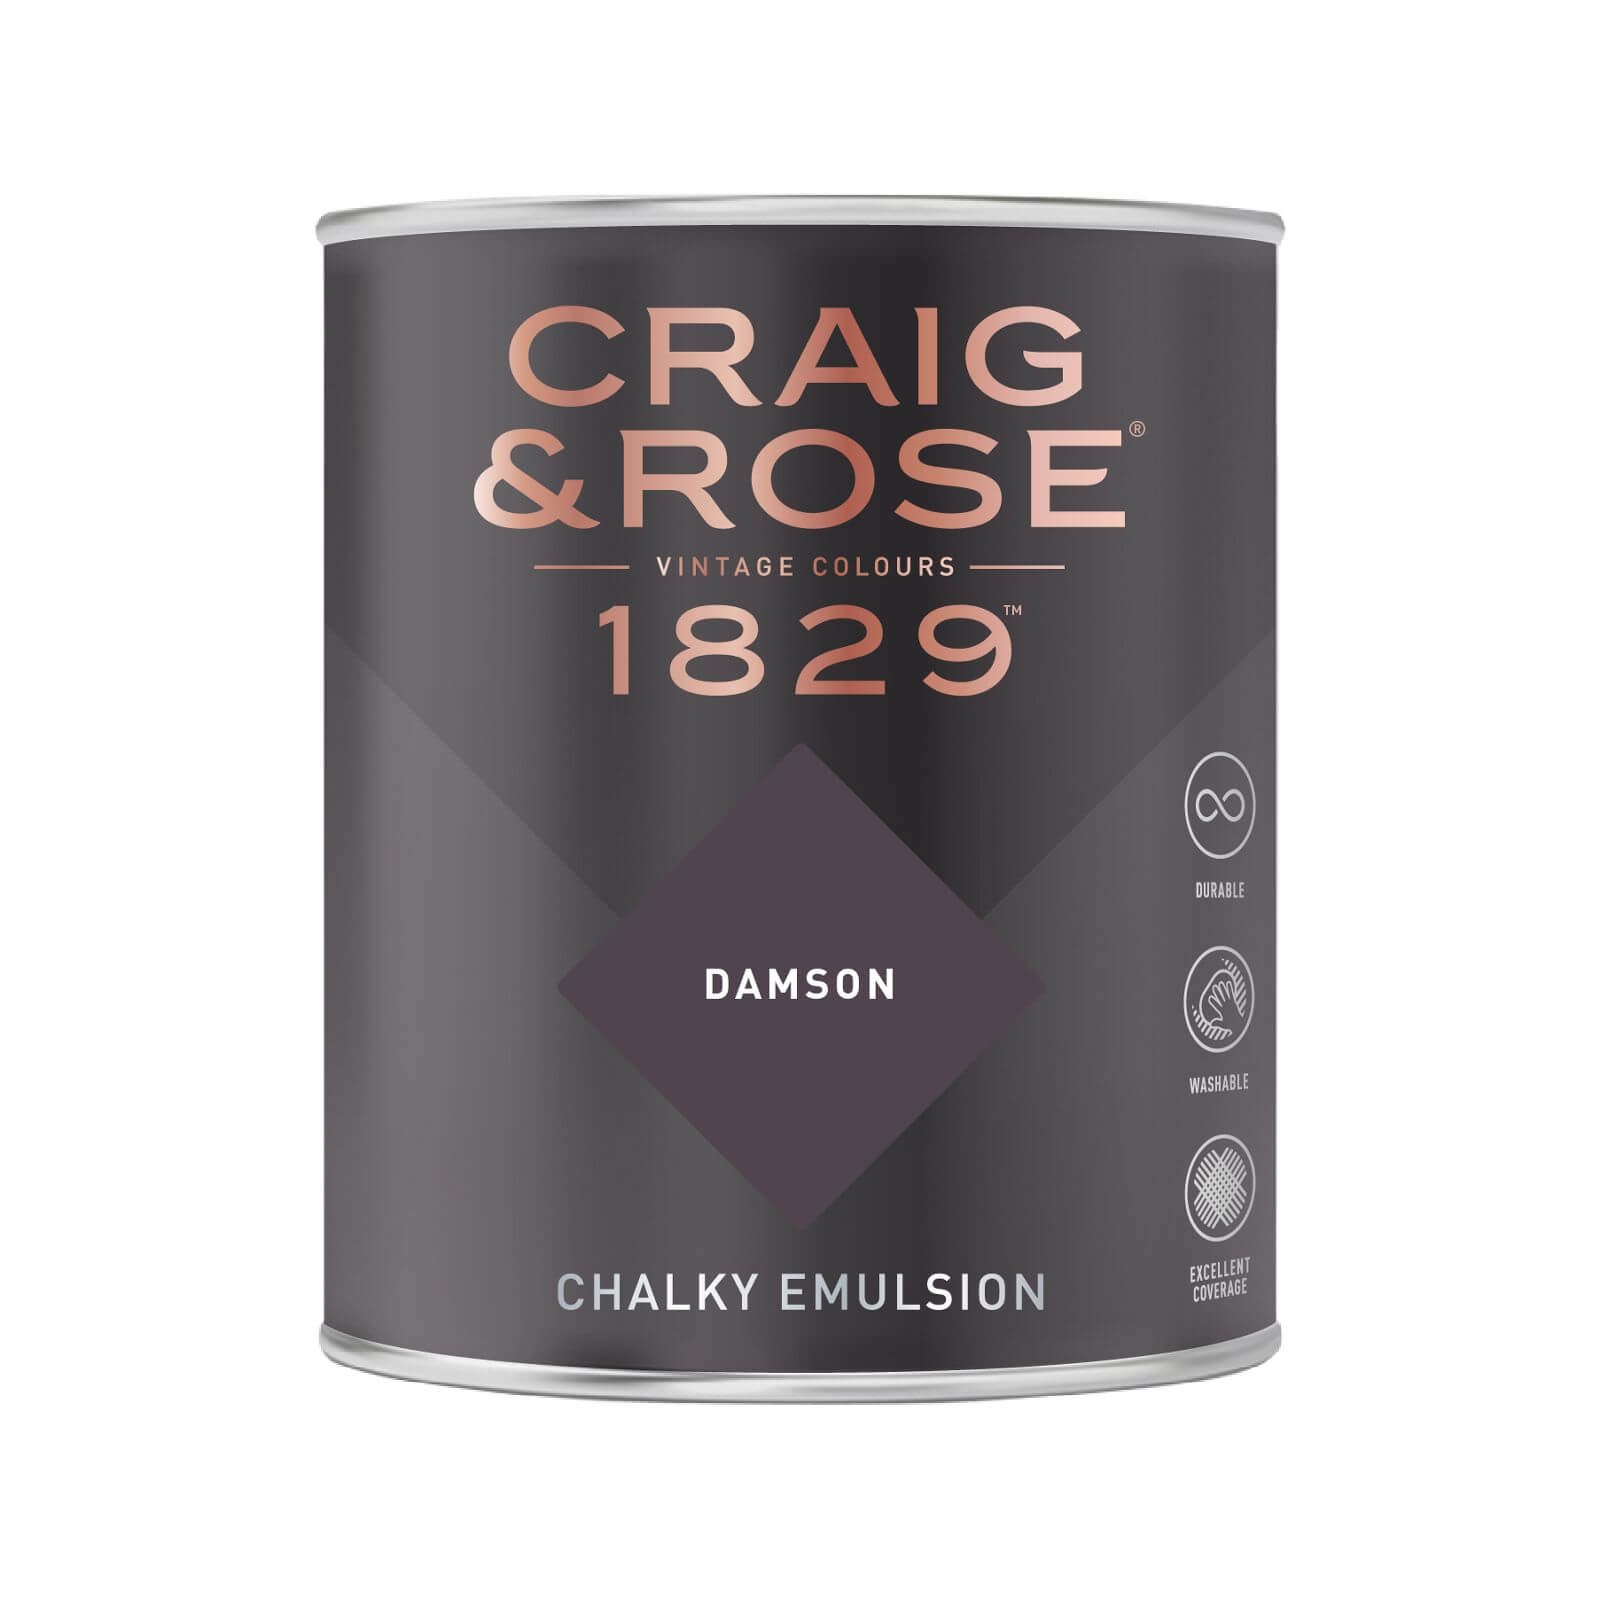 Craig & Rose 1829 Chalky Emulsion Paint Damson - 750ml